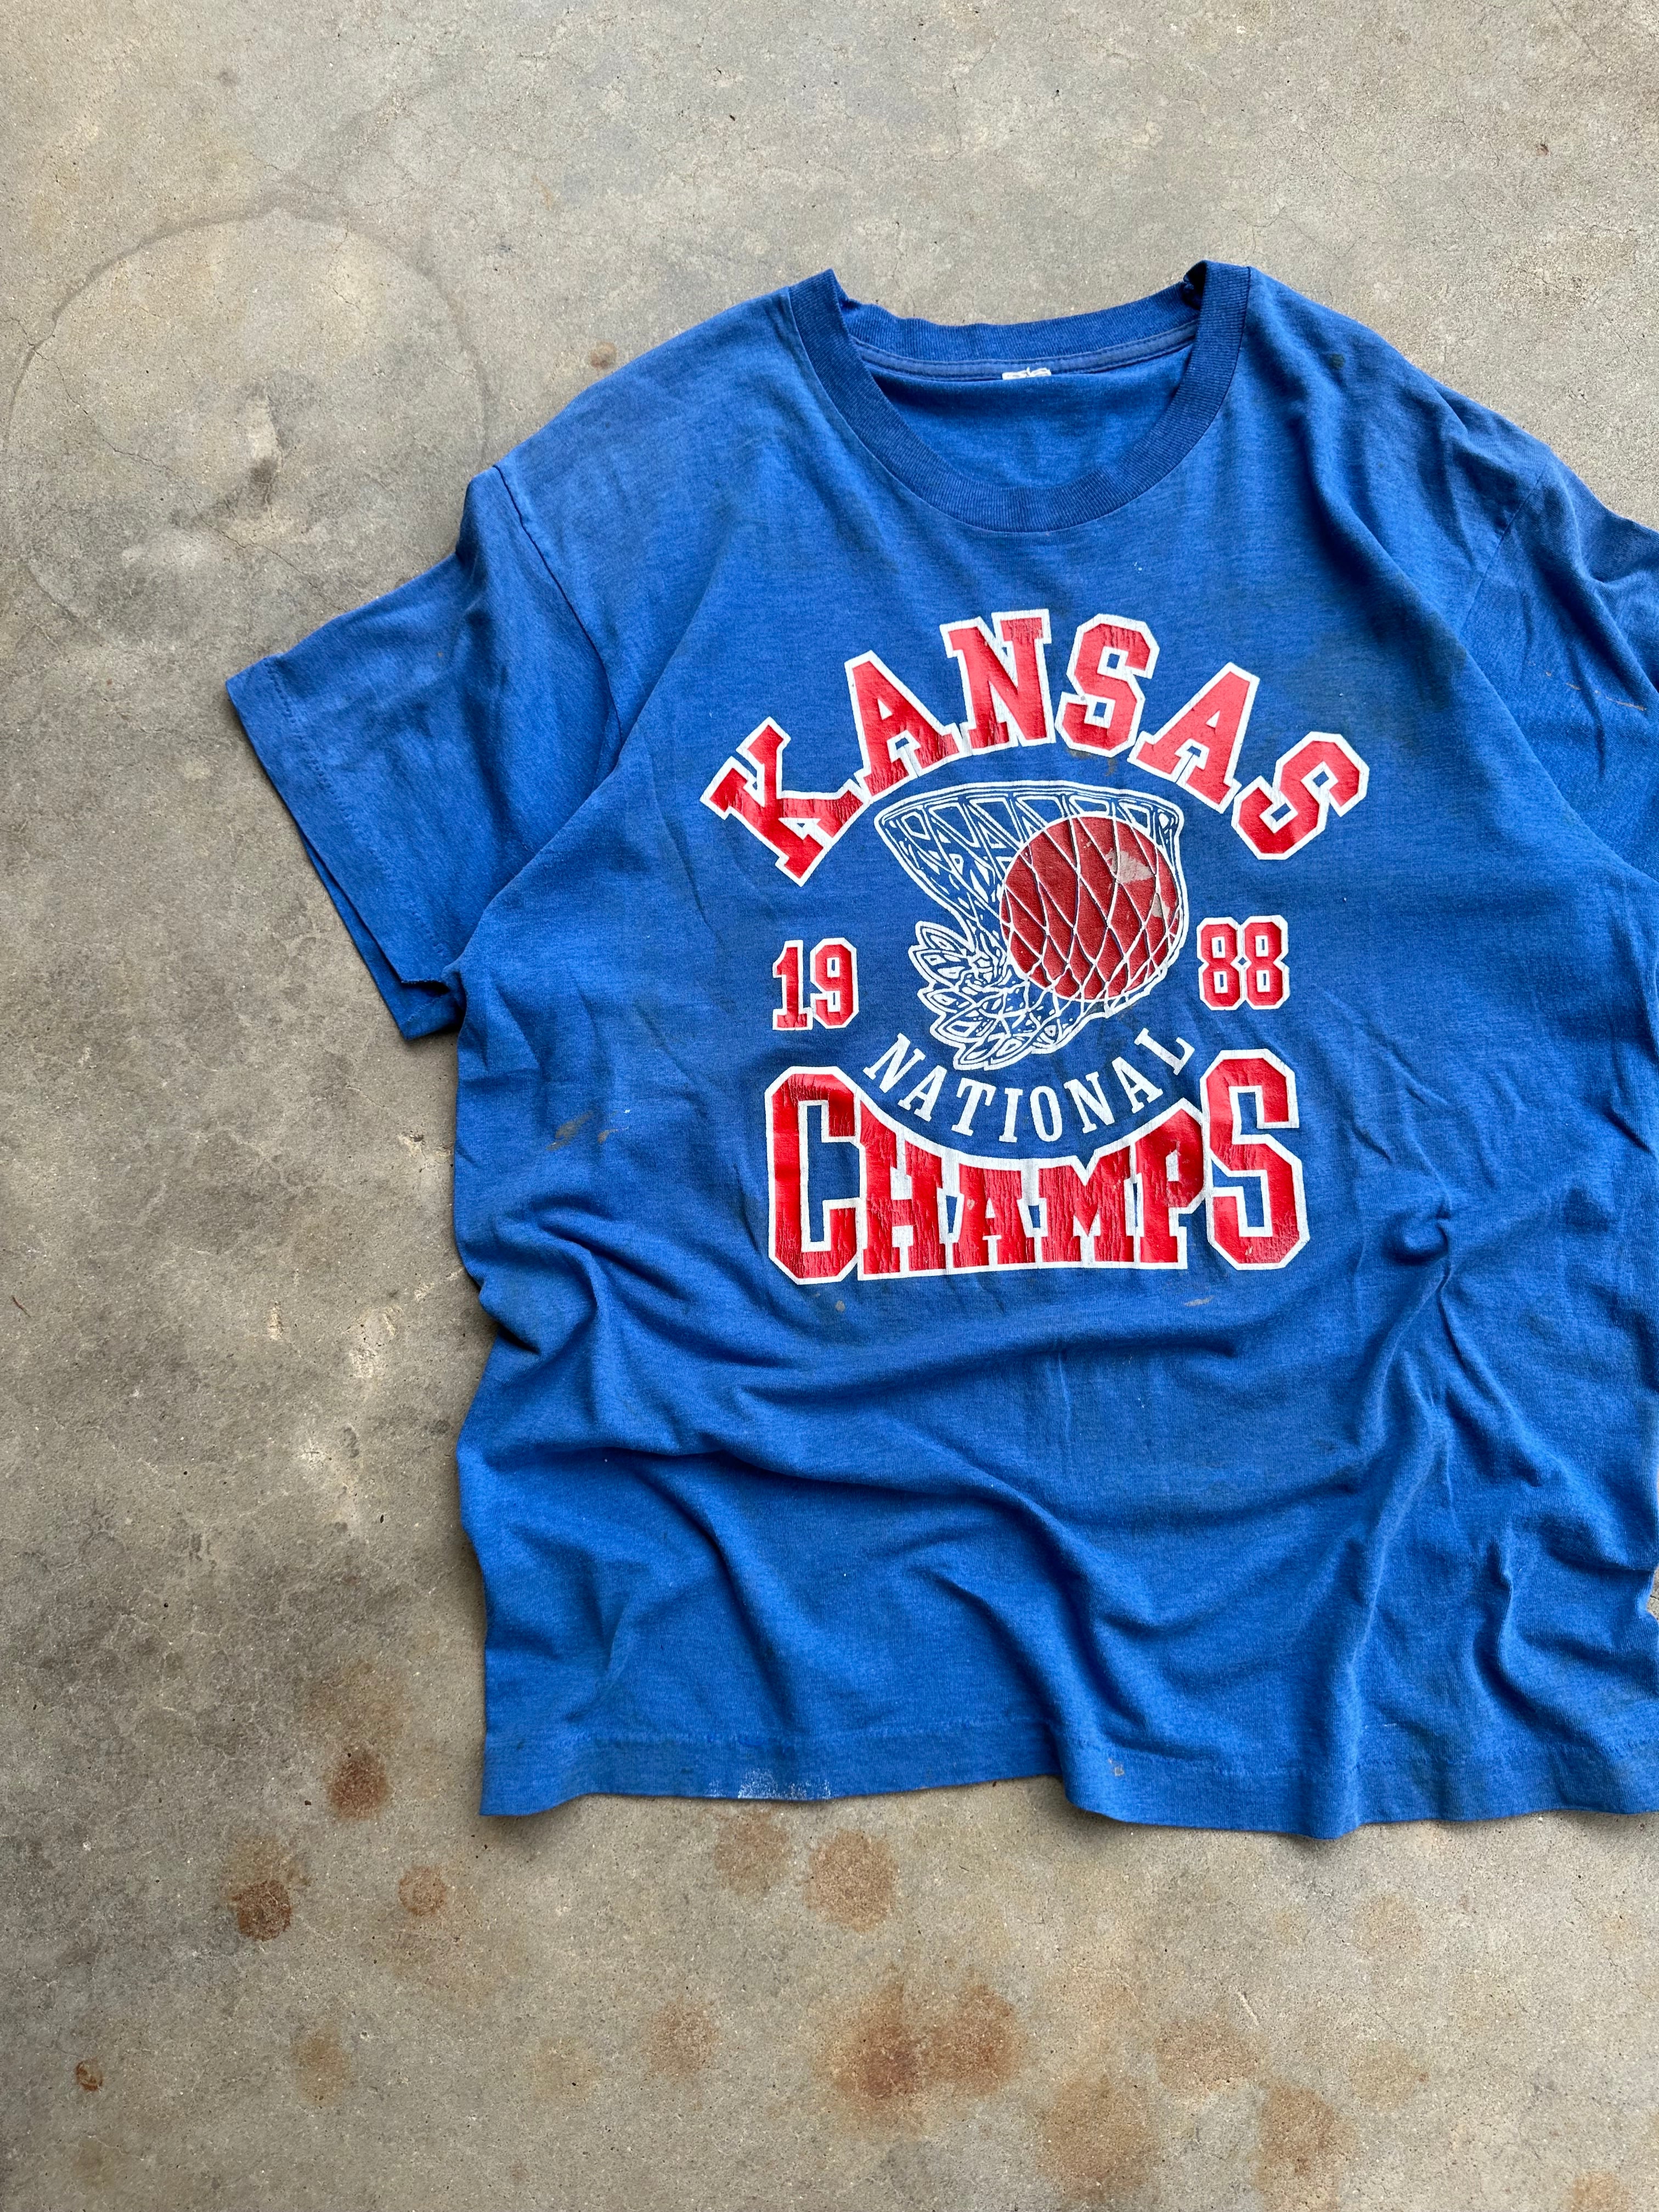 1988 Distressed/Worn Kansas National Champions T-Shirt (L)